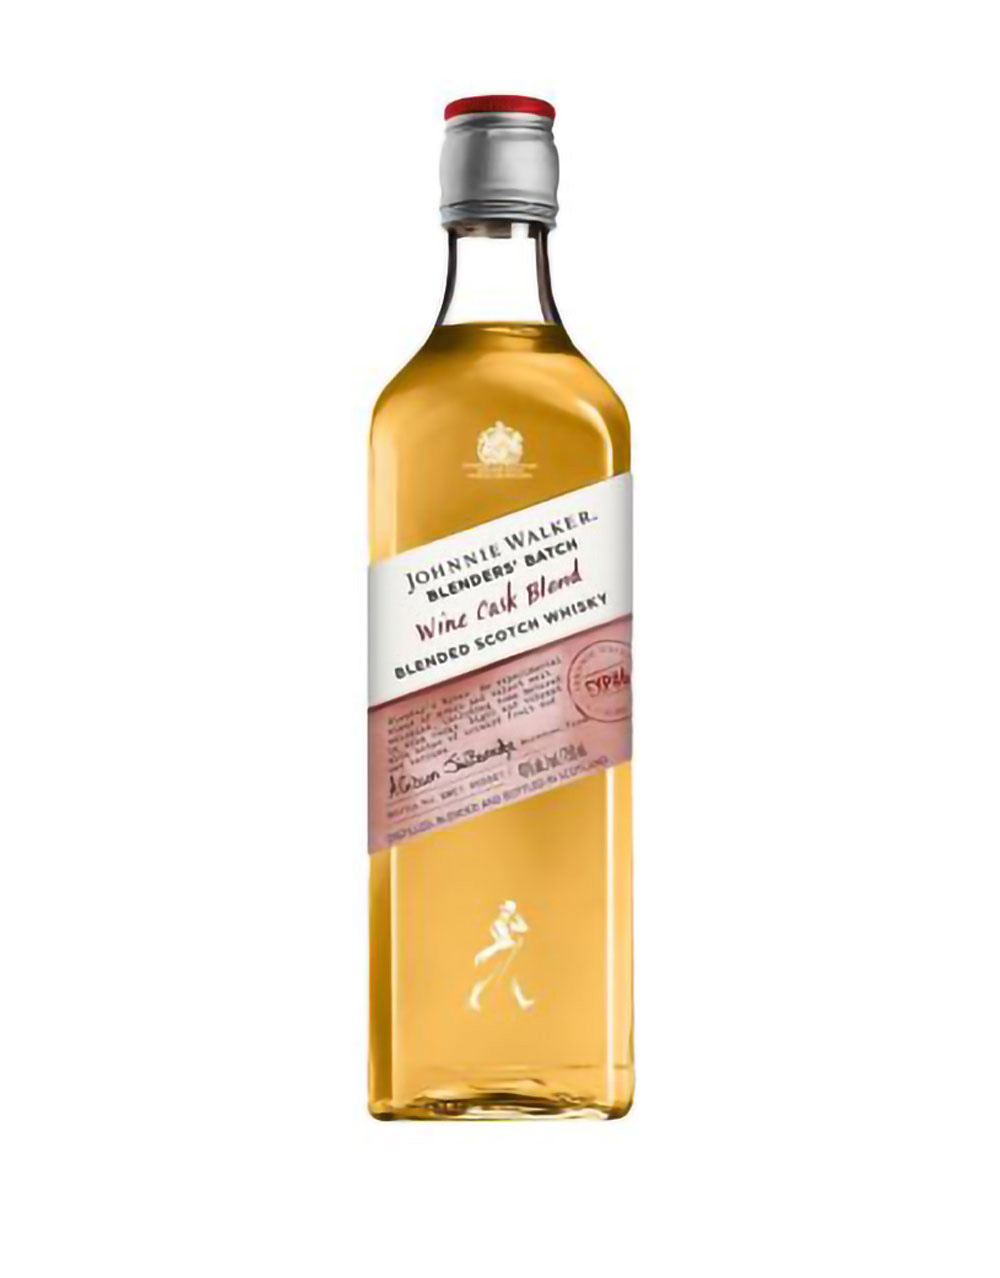 The Macallan Edition No. 4 Single Malt Scotch Whisky